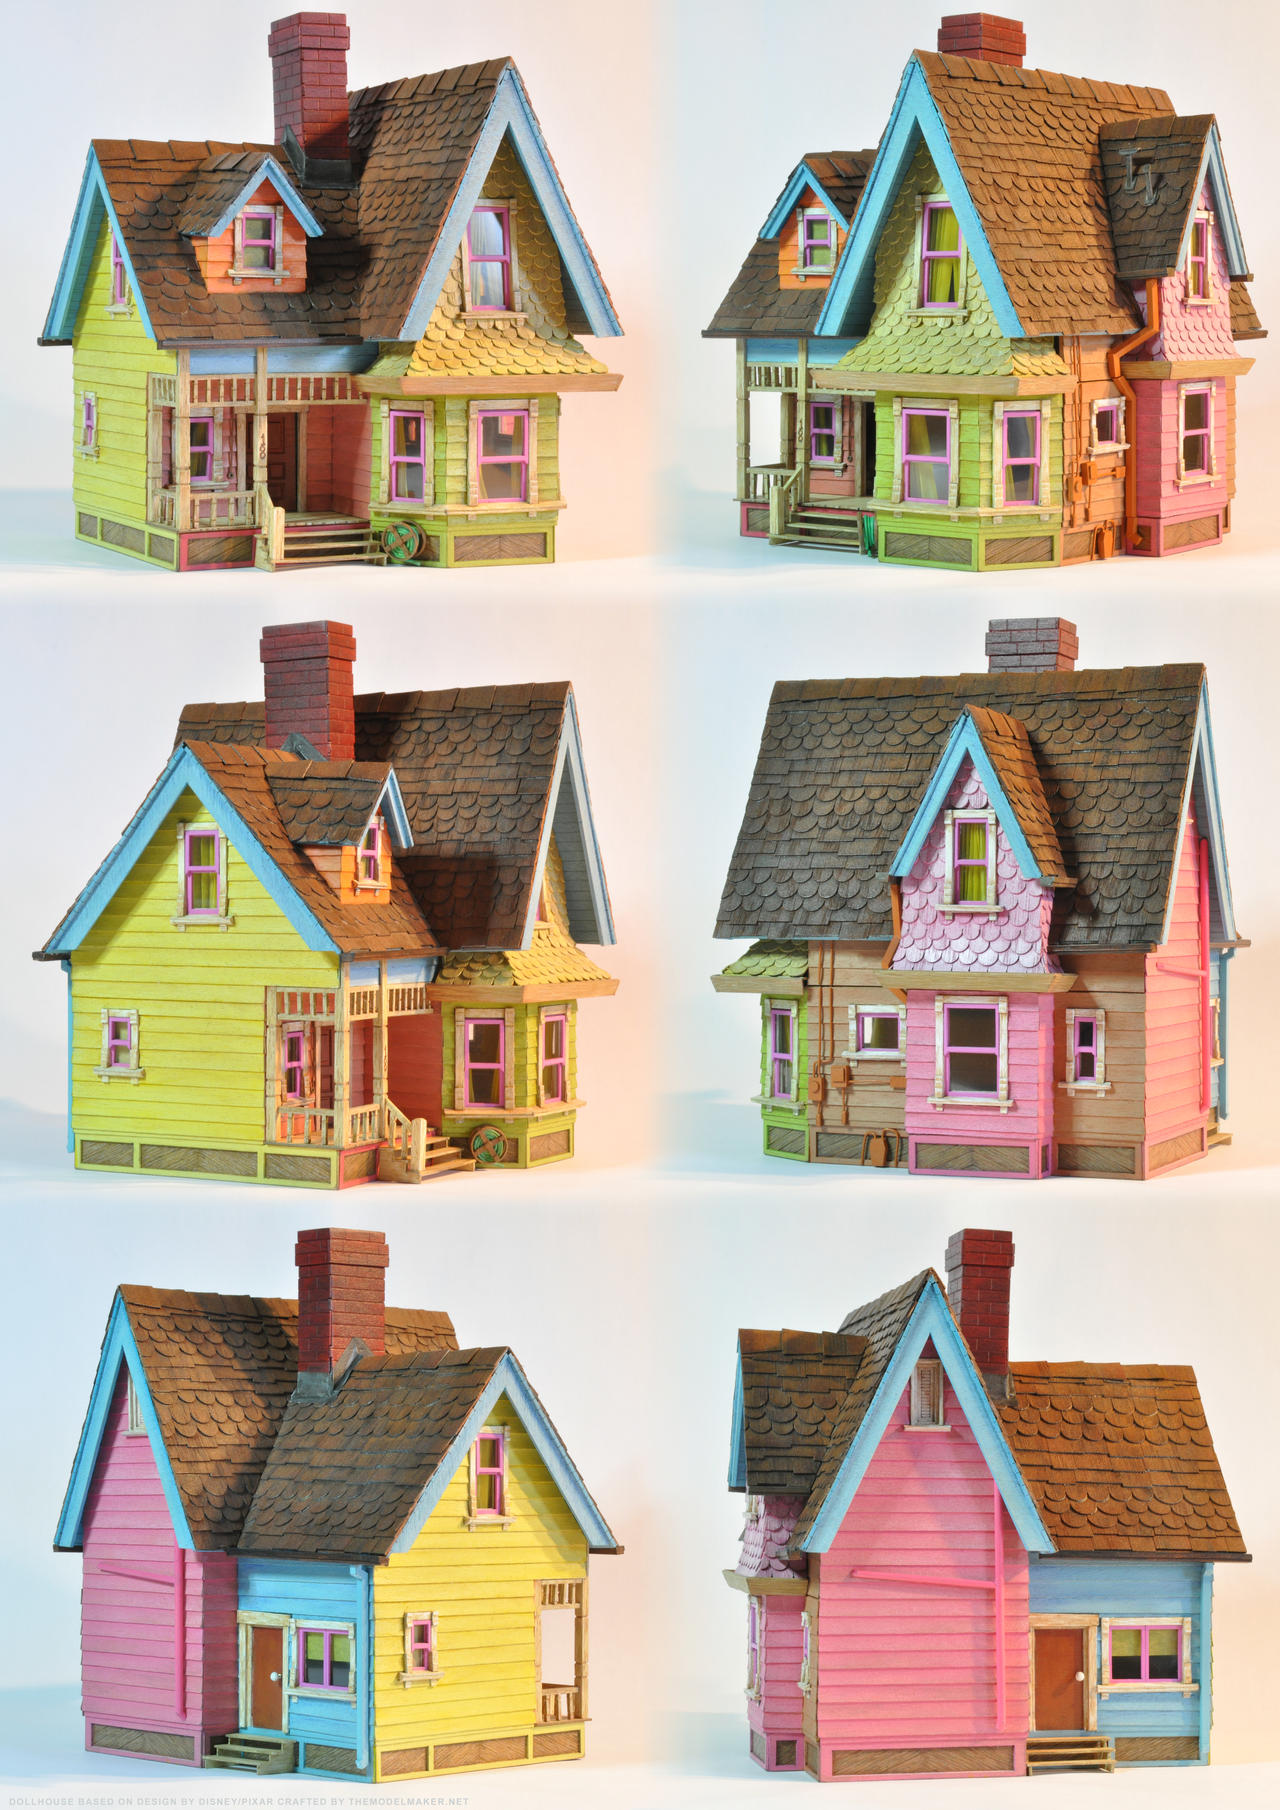 up-dollhouse-poster-by-artmik-on-deviantart-disney-up-house-rainbow-house-up-house-pixar